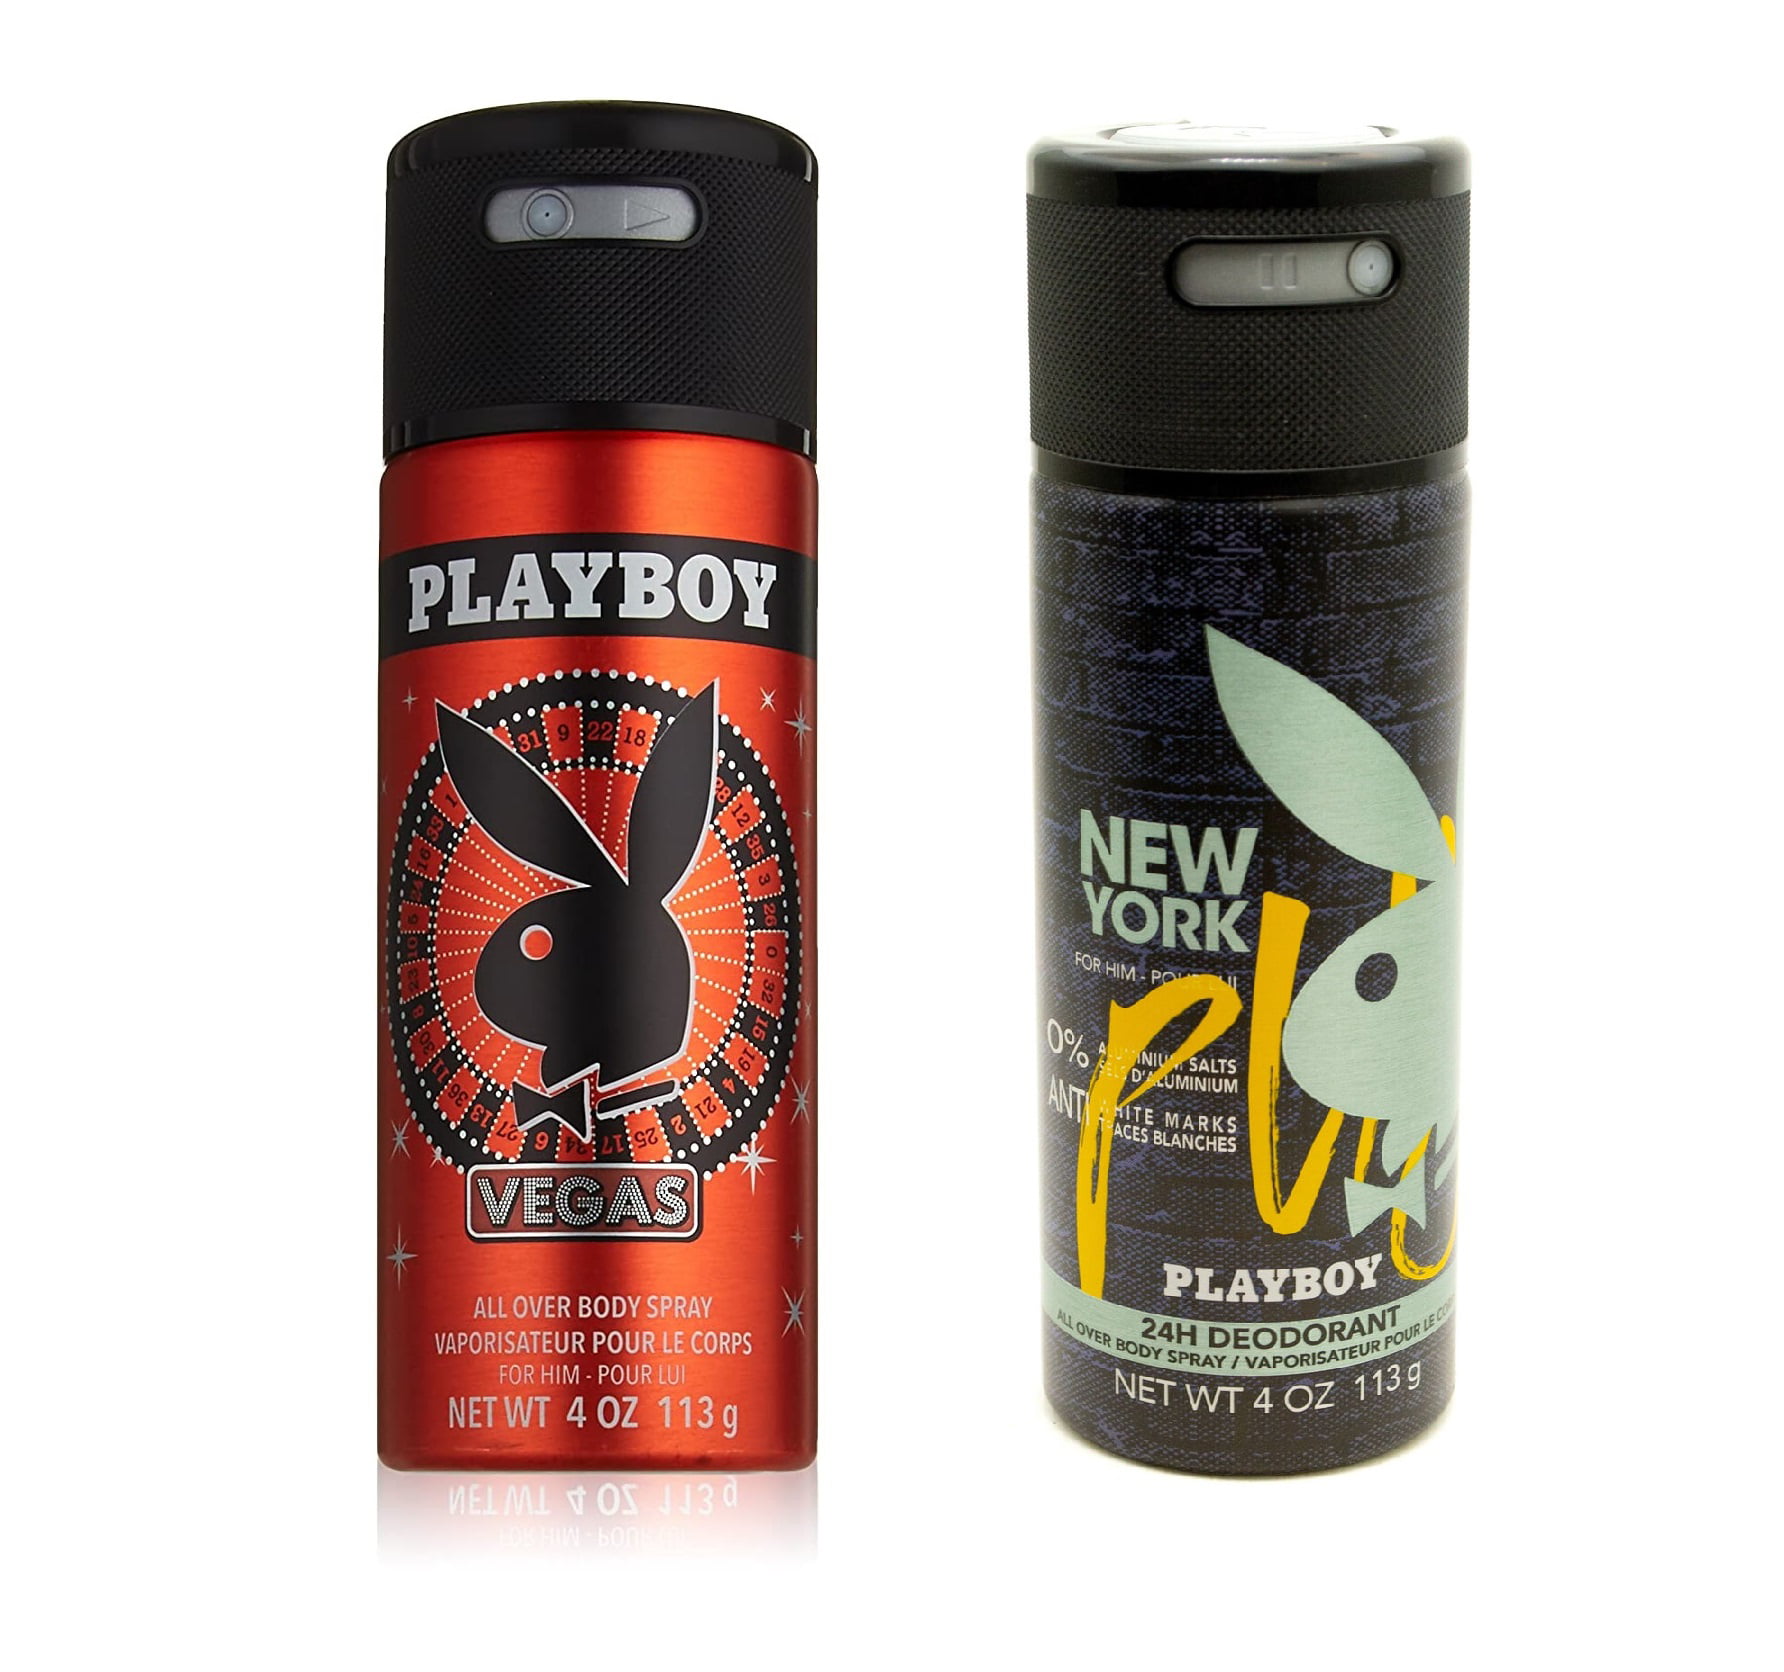 Playboy for Him 24hr Deodorant All Over Body Duo, Vegas and York, 4 oz each - Walmart.com